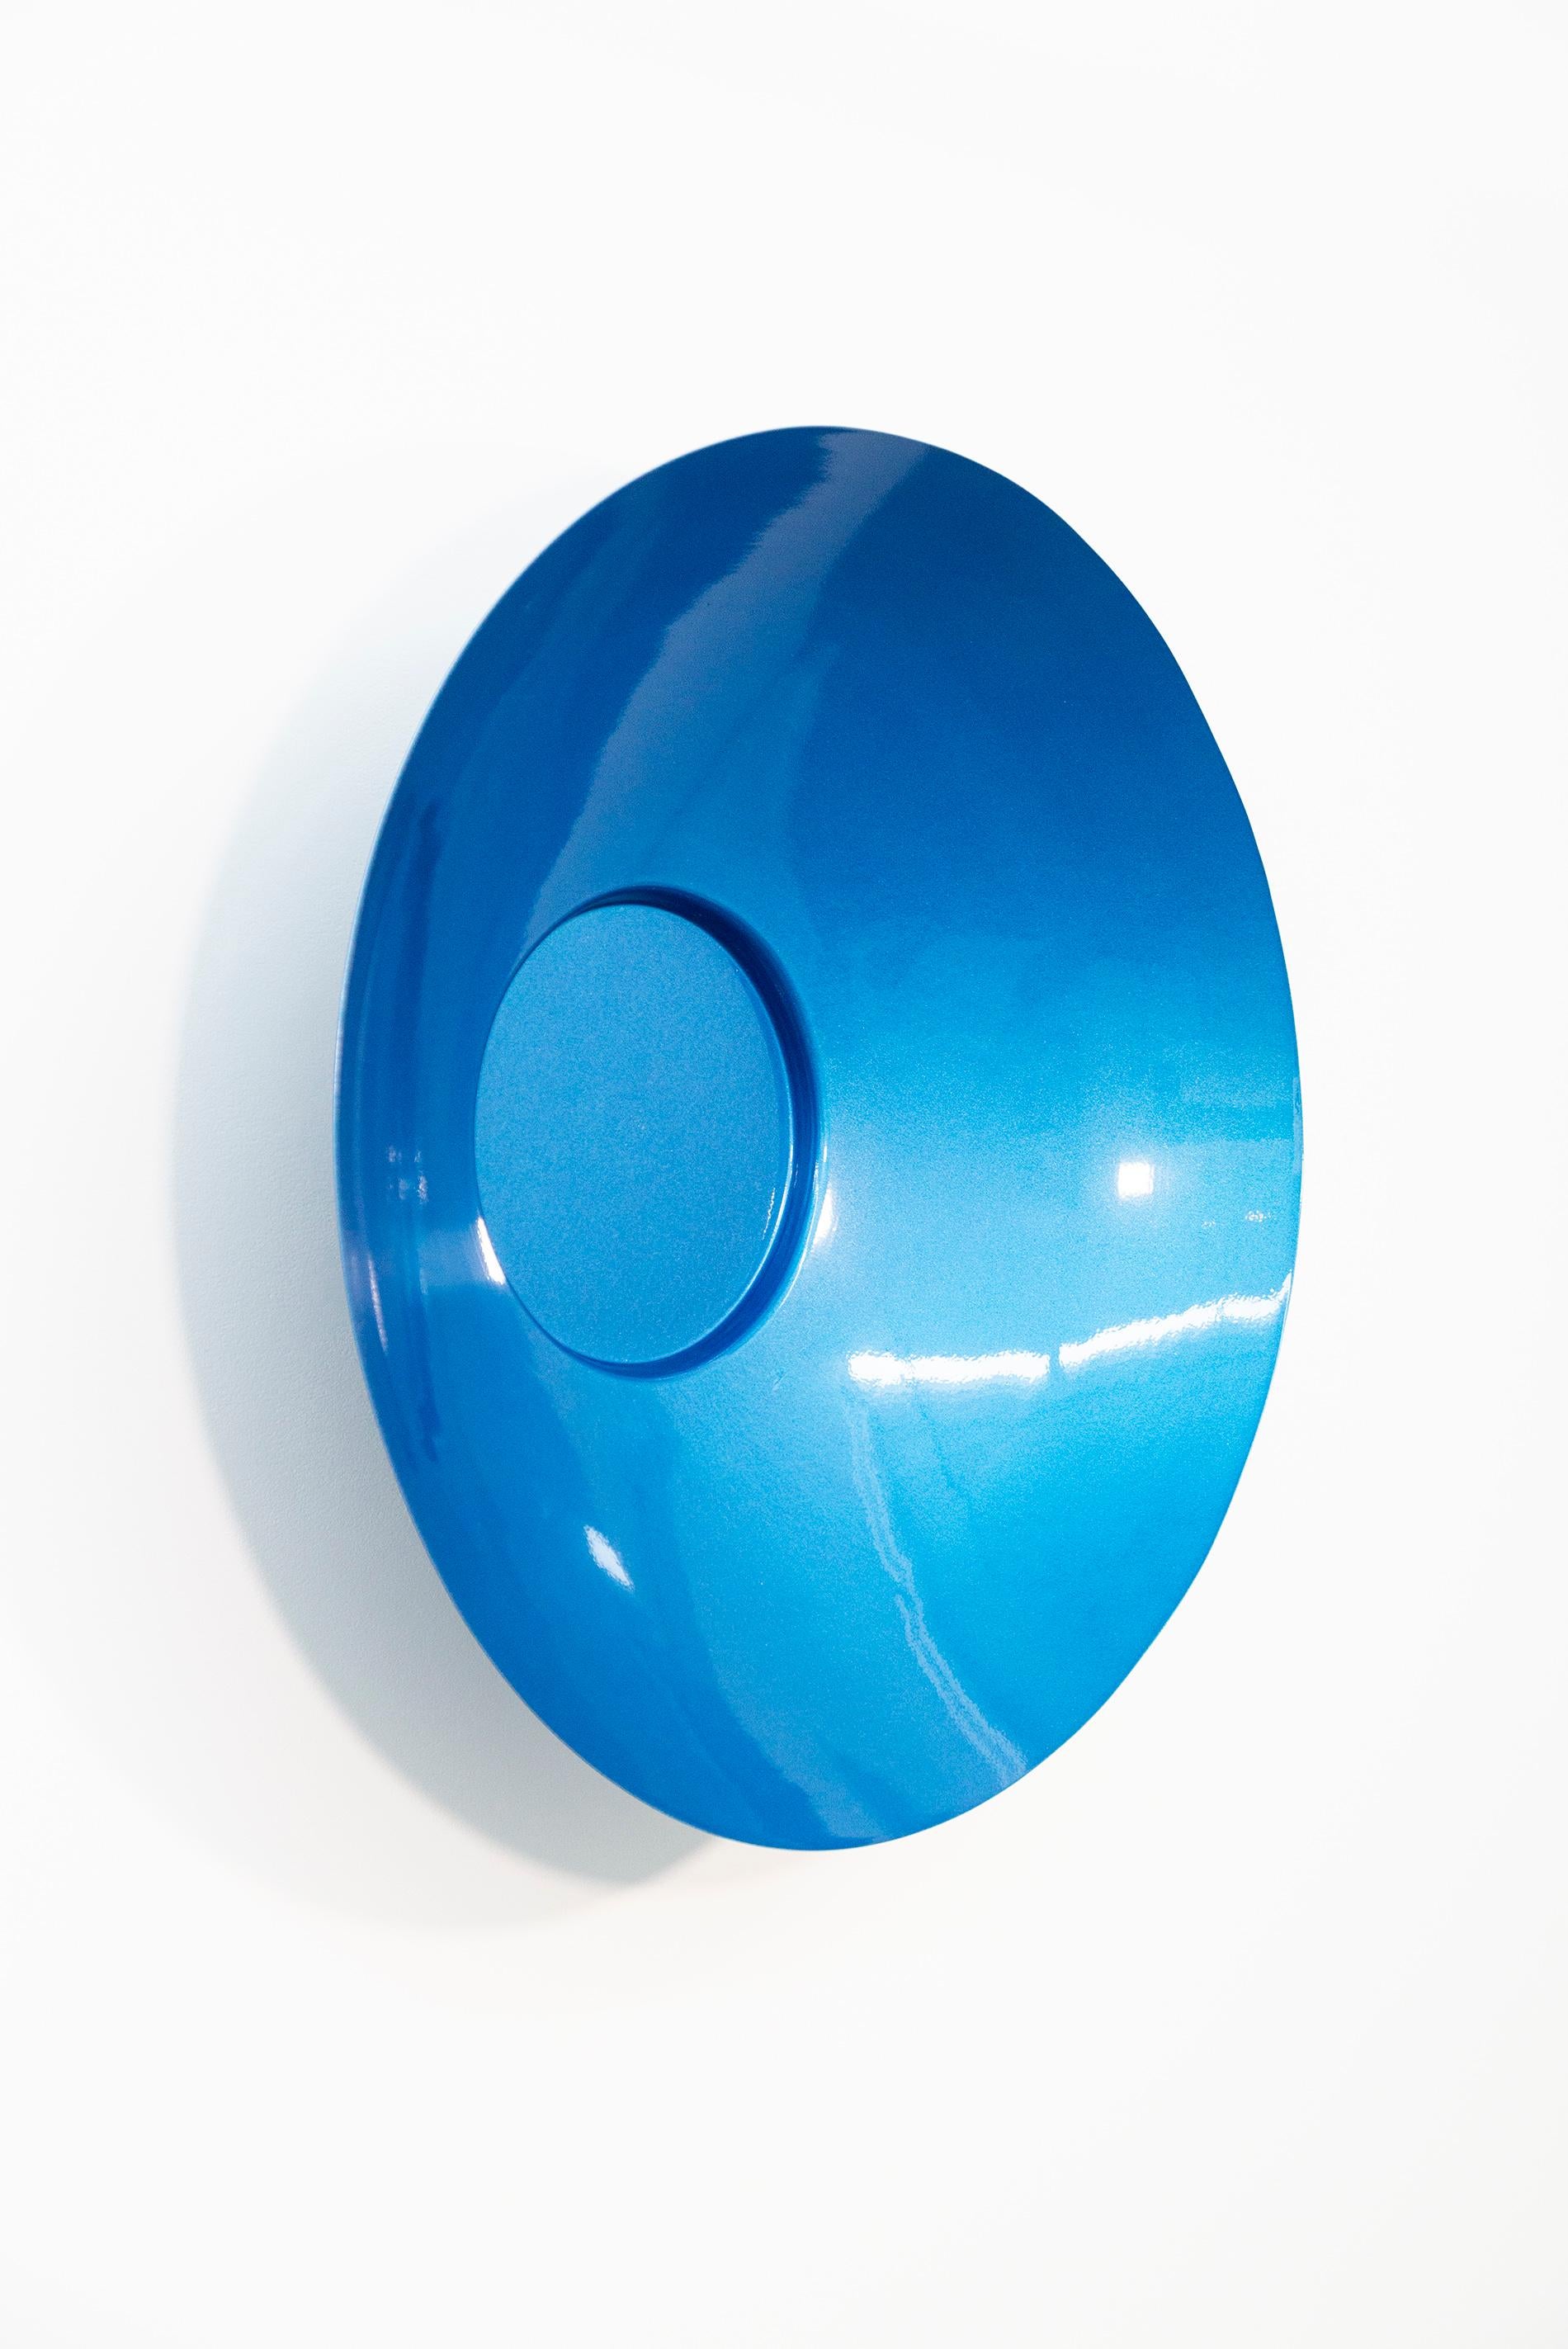 Singing Vessel Atlantic Blue 32 - circular, contemporary, steel wall sculpture For Sale 1